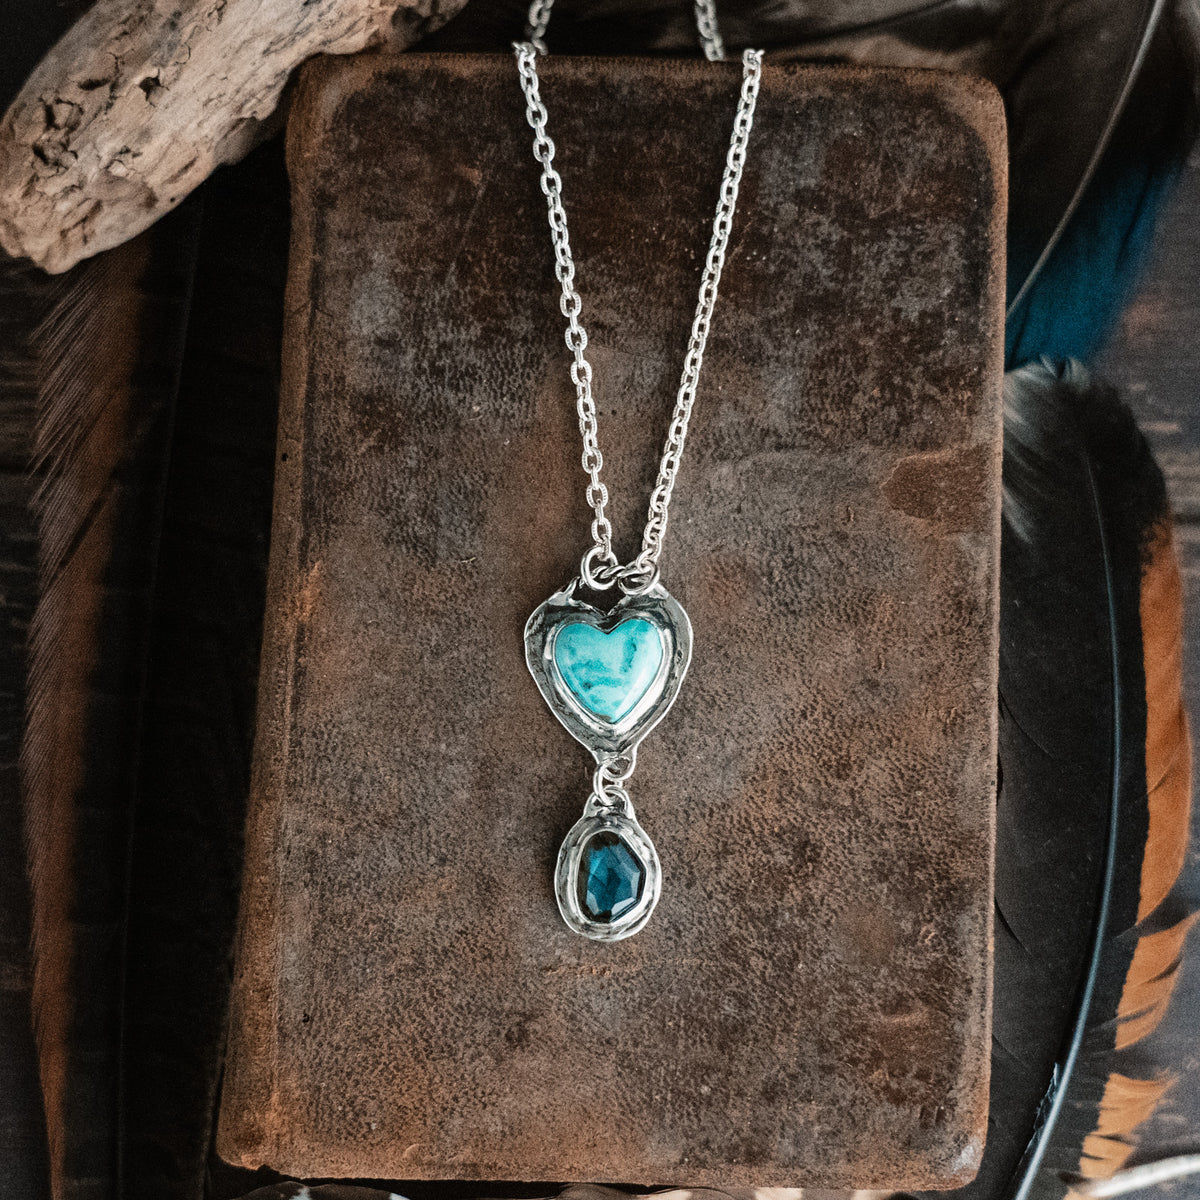 Make a Wish Turquoise Labradorite Necklace